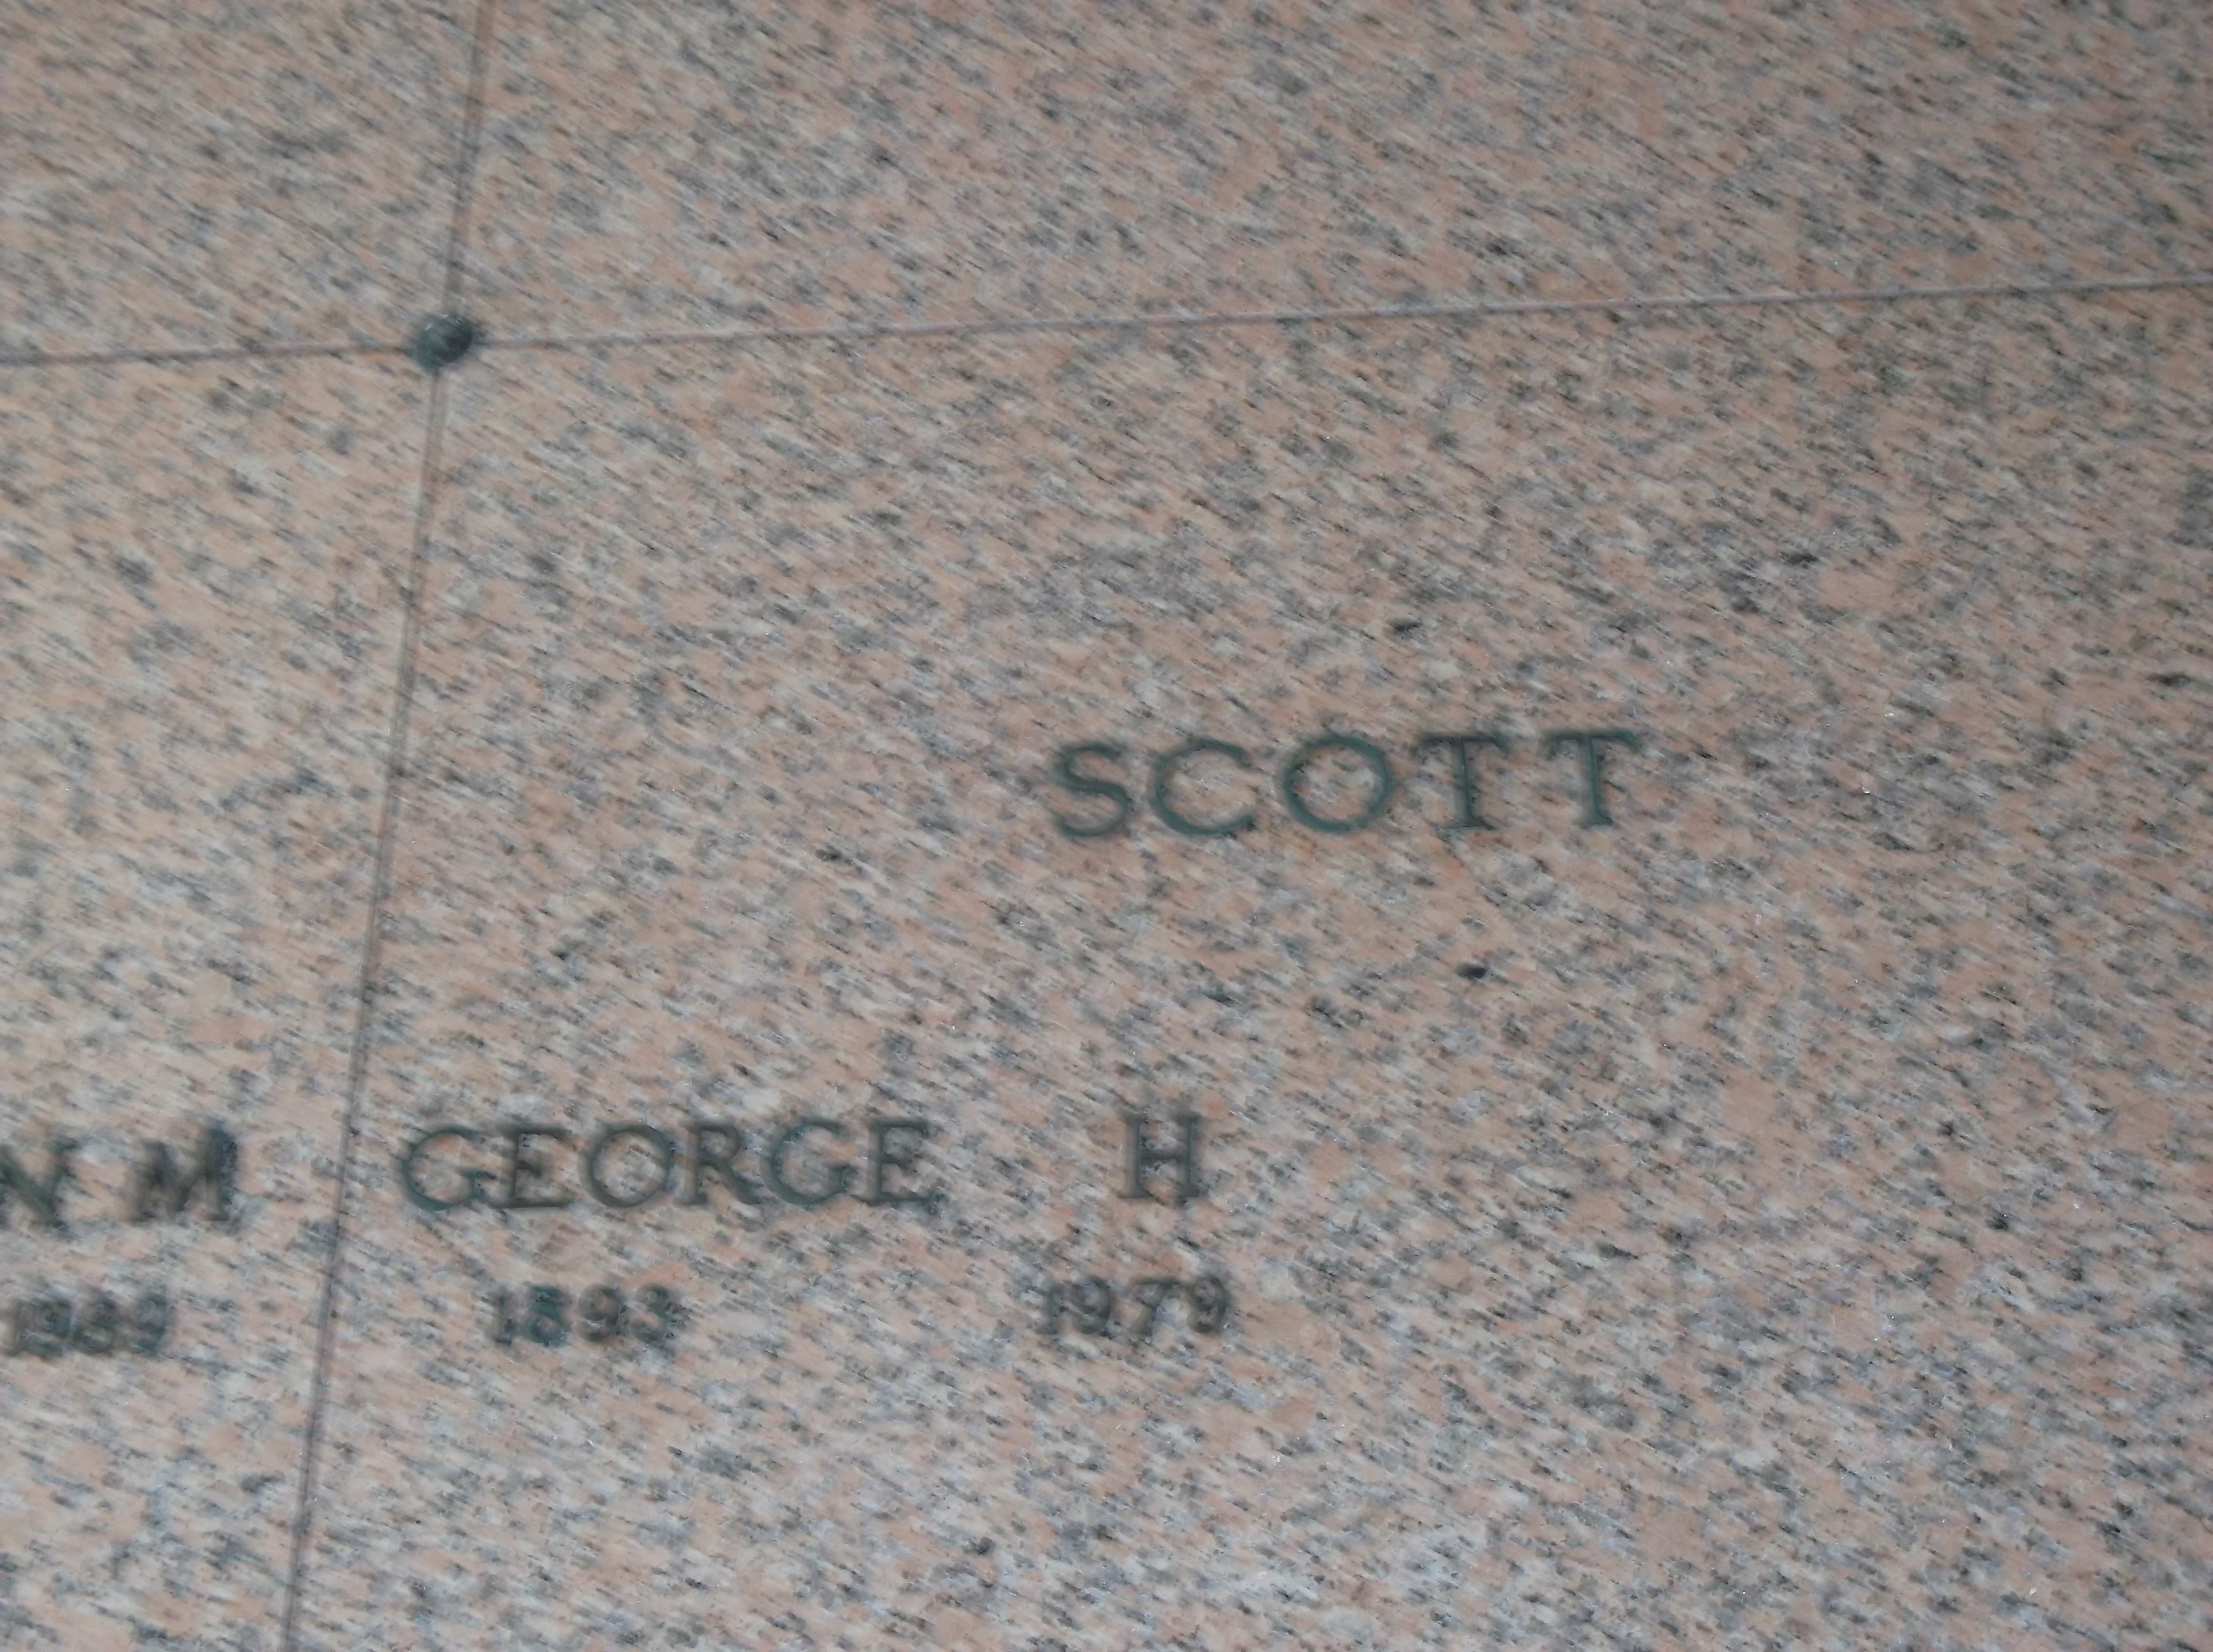 George H Scott